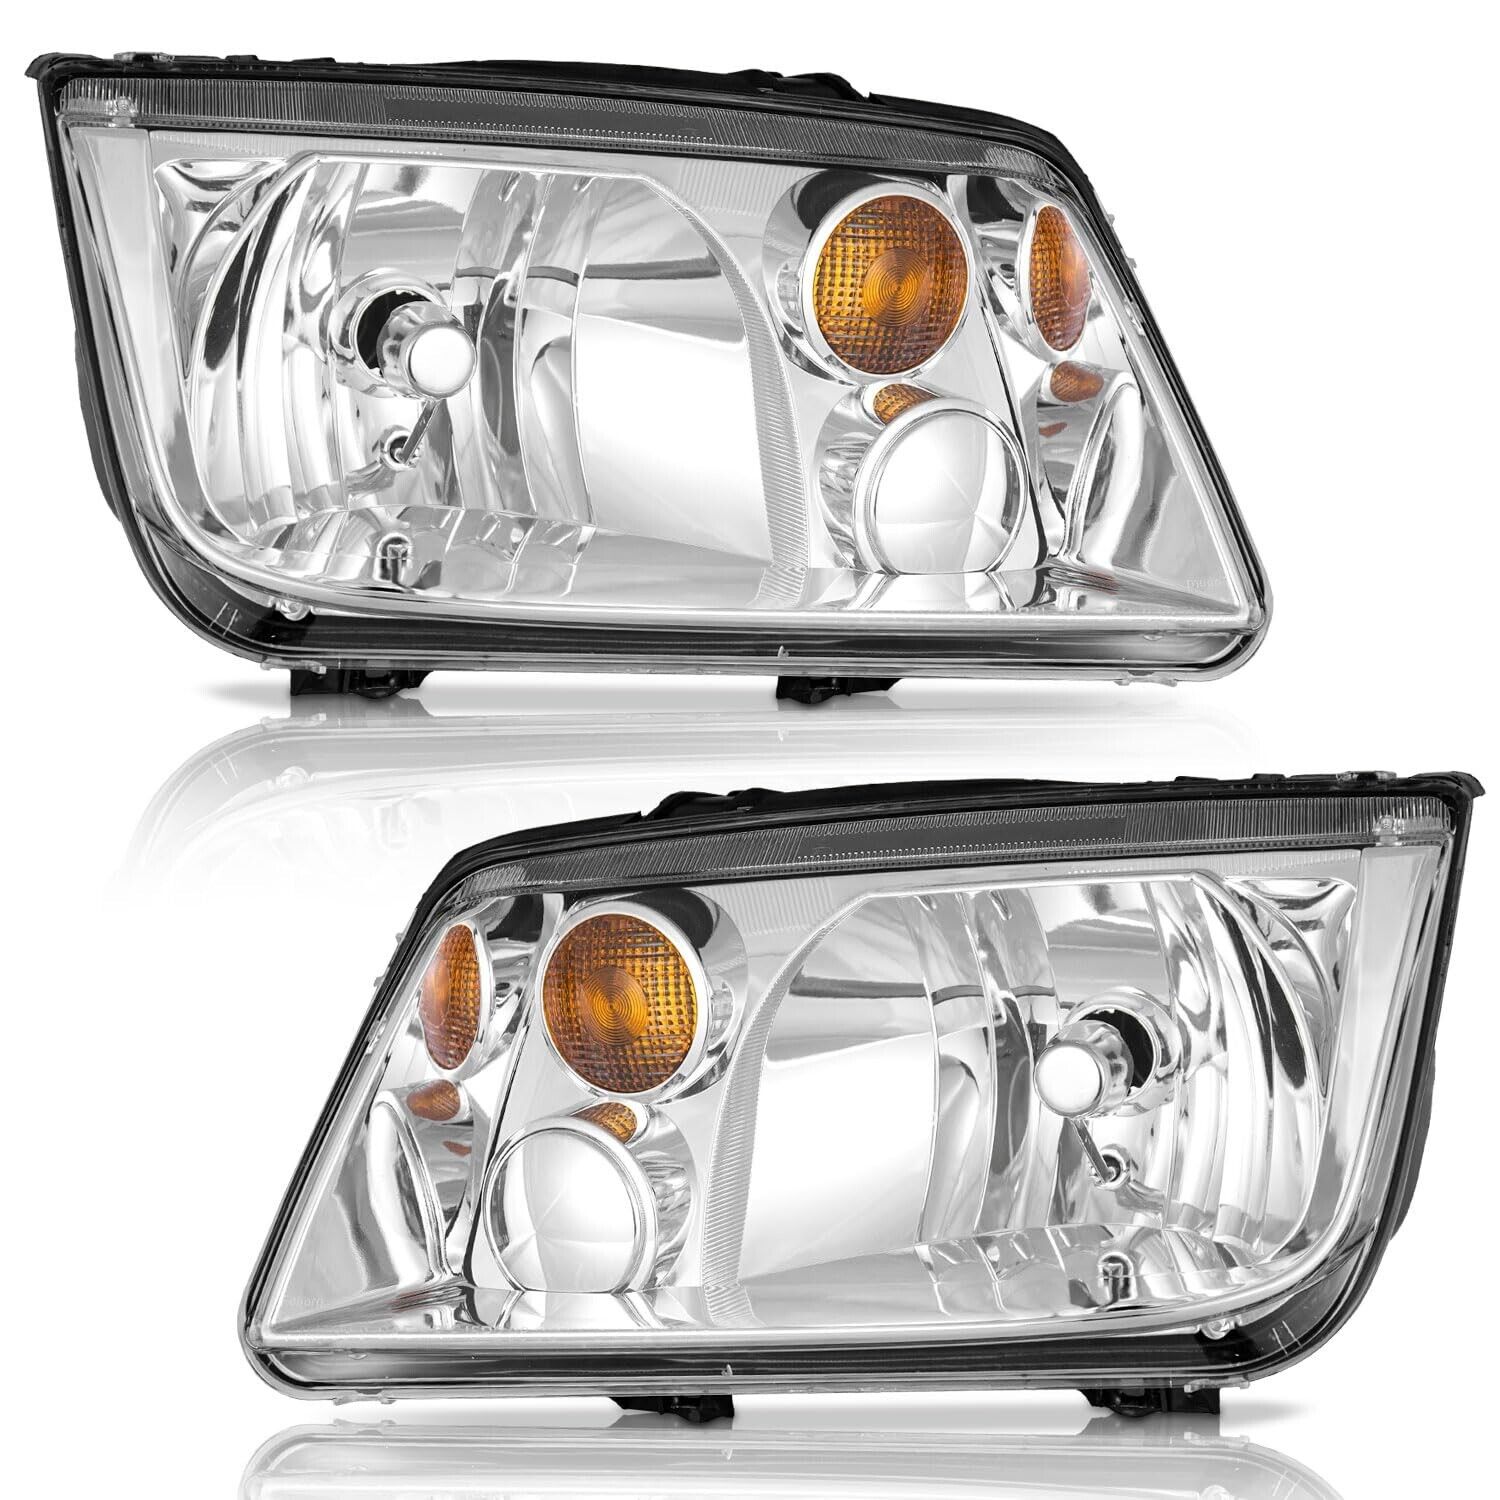 WEELMOTO Headlights For 1999-2005 Volkswagen Jetta Bora Headlamps Left+Right